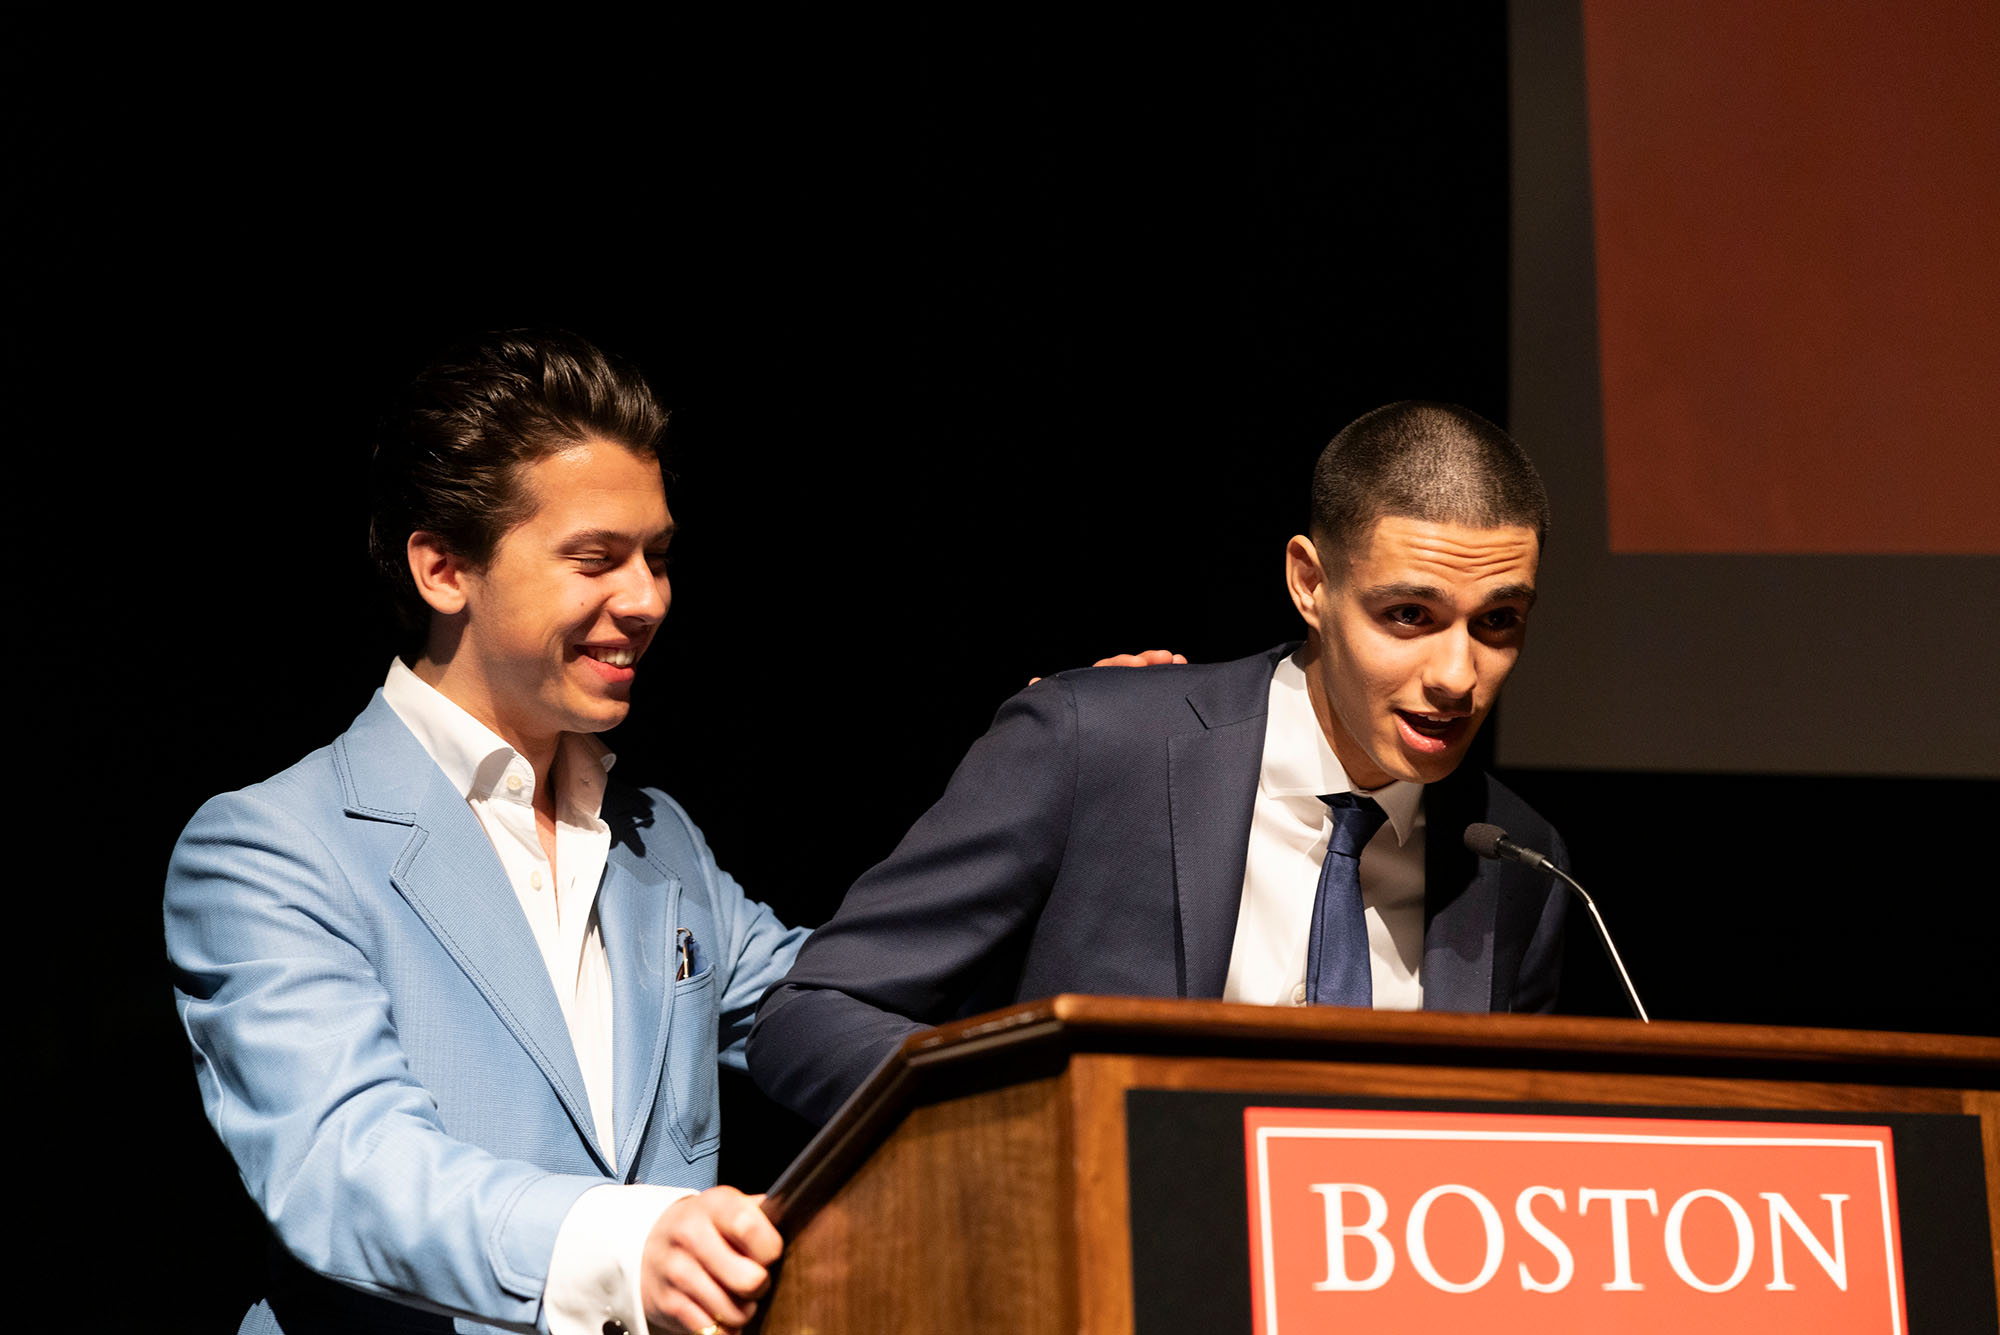 Photo: A photo of two men saying this at the podium. "boston university"